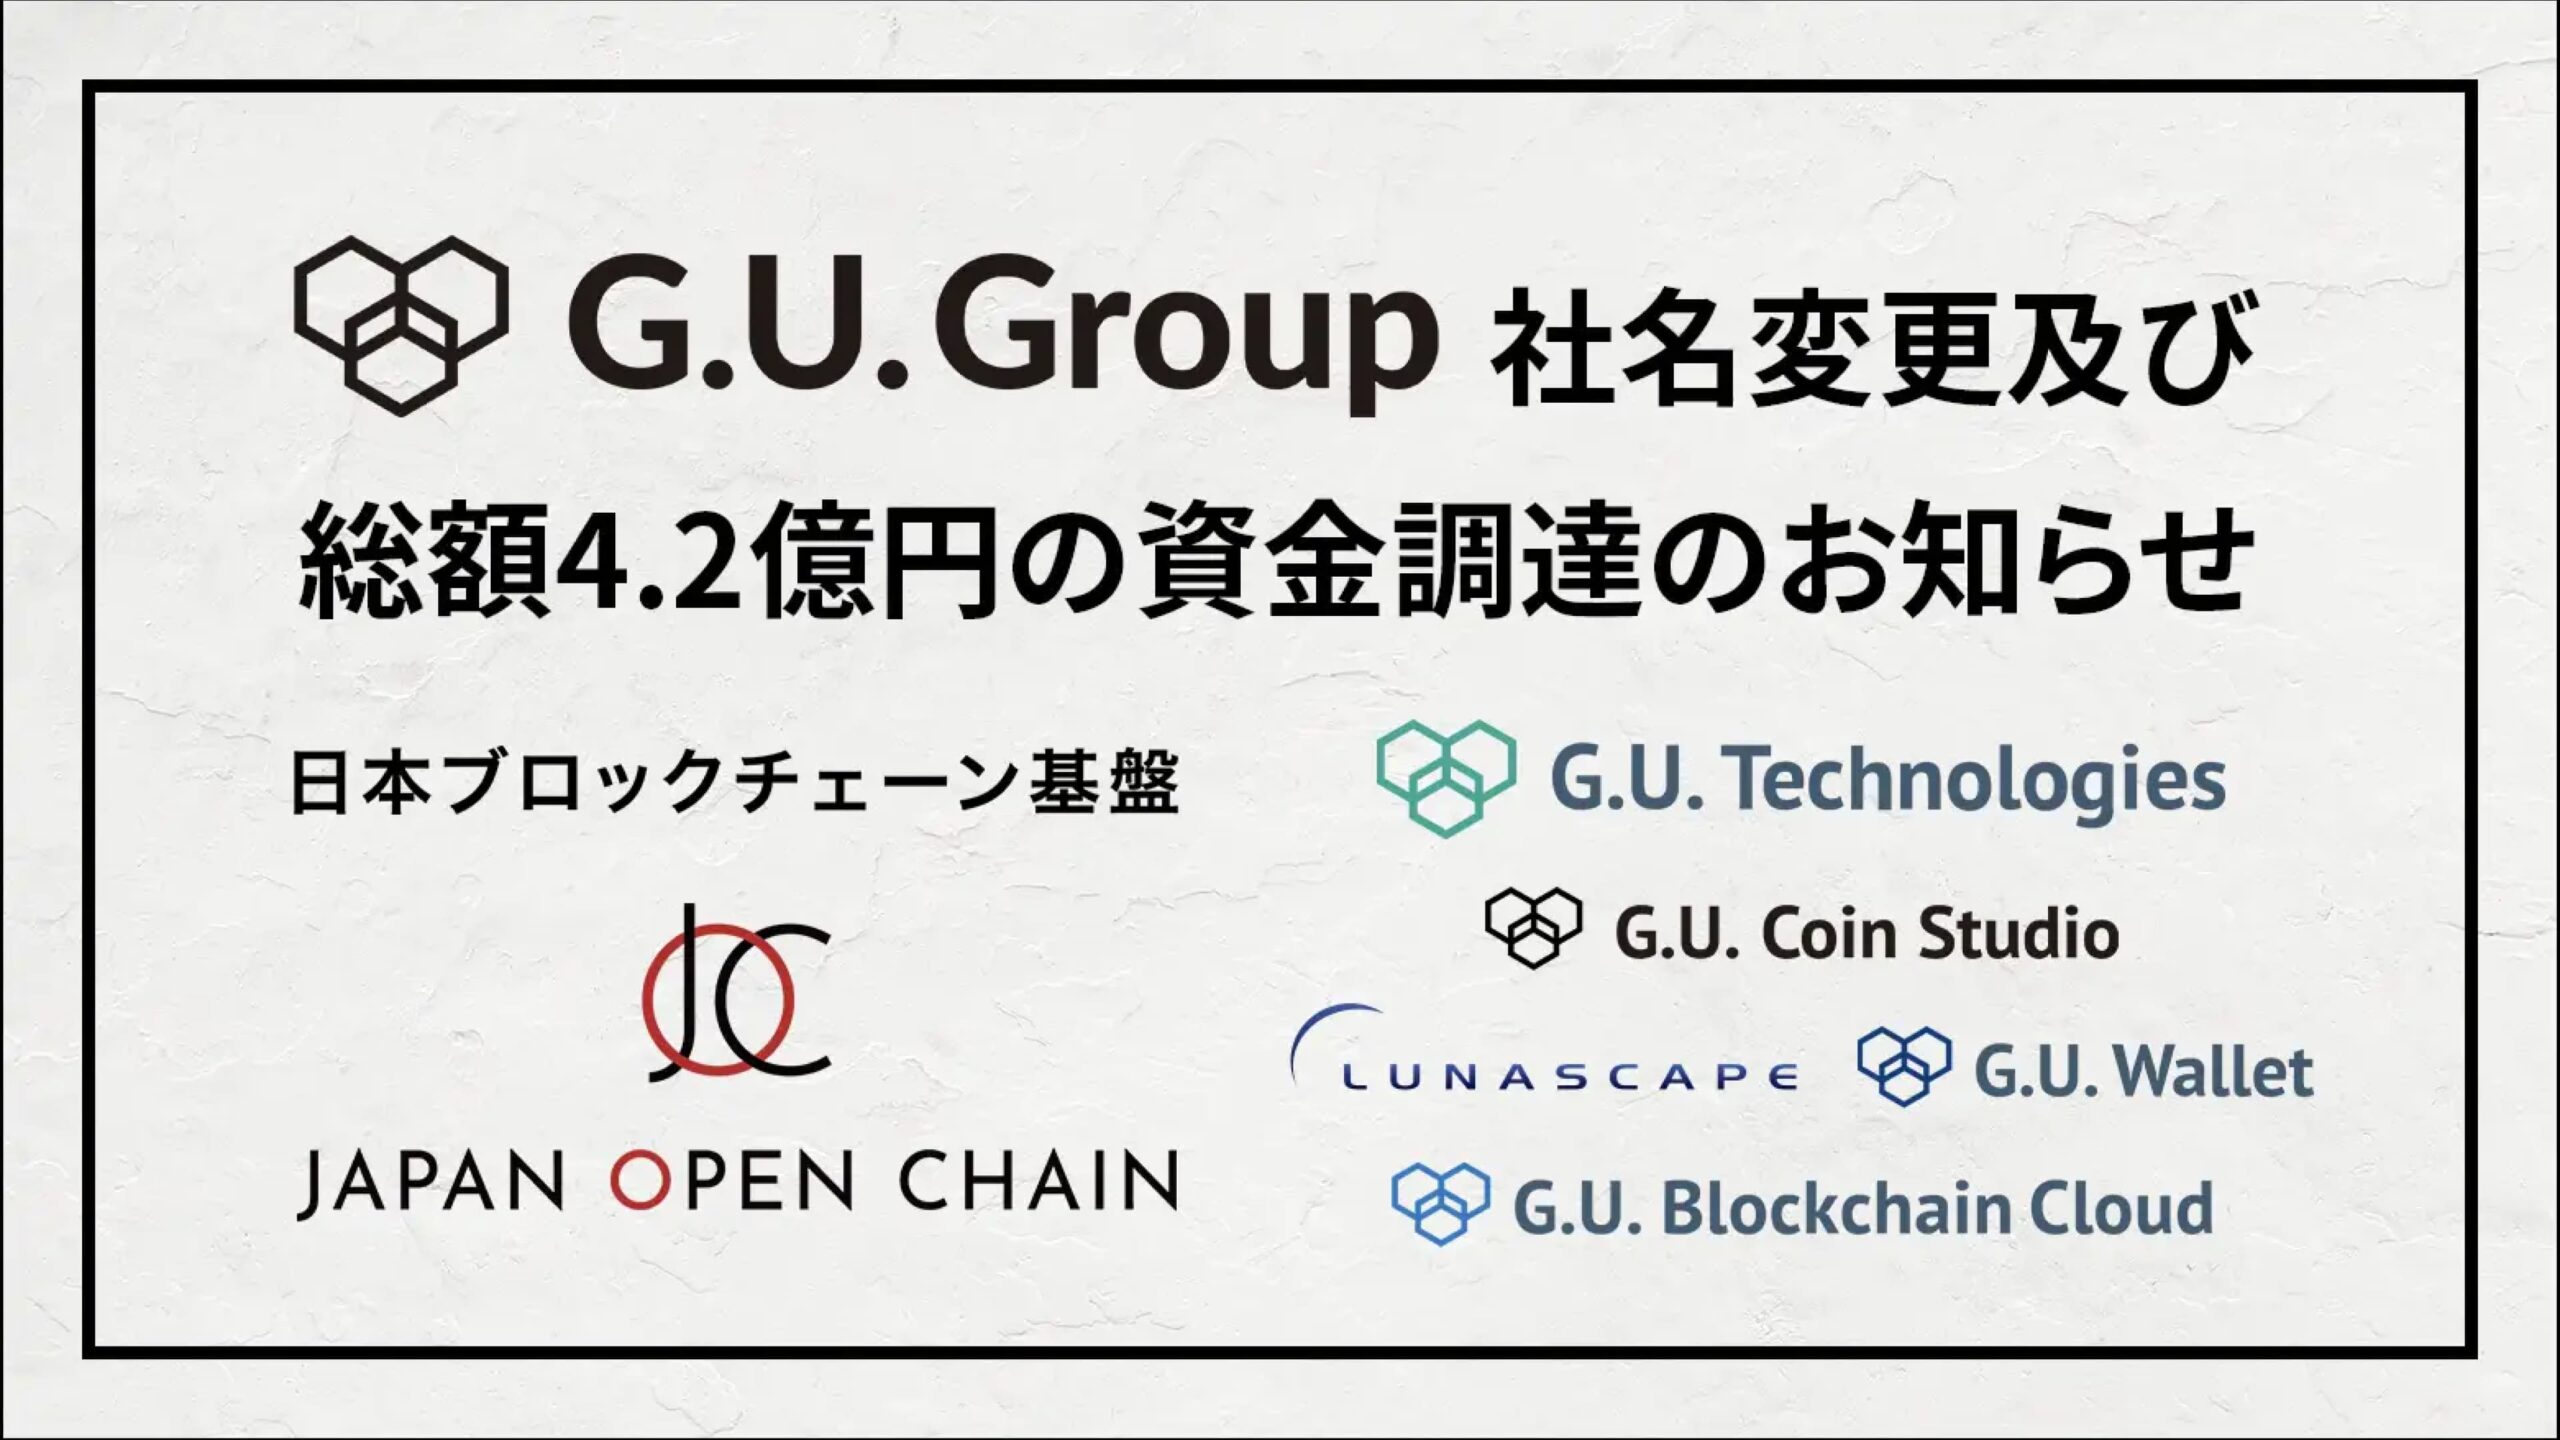 G.U.Gruop株式会社、4.2億円の資金調達ー社名をG.U.LabsからG.U.Groupへ変更